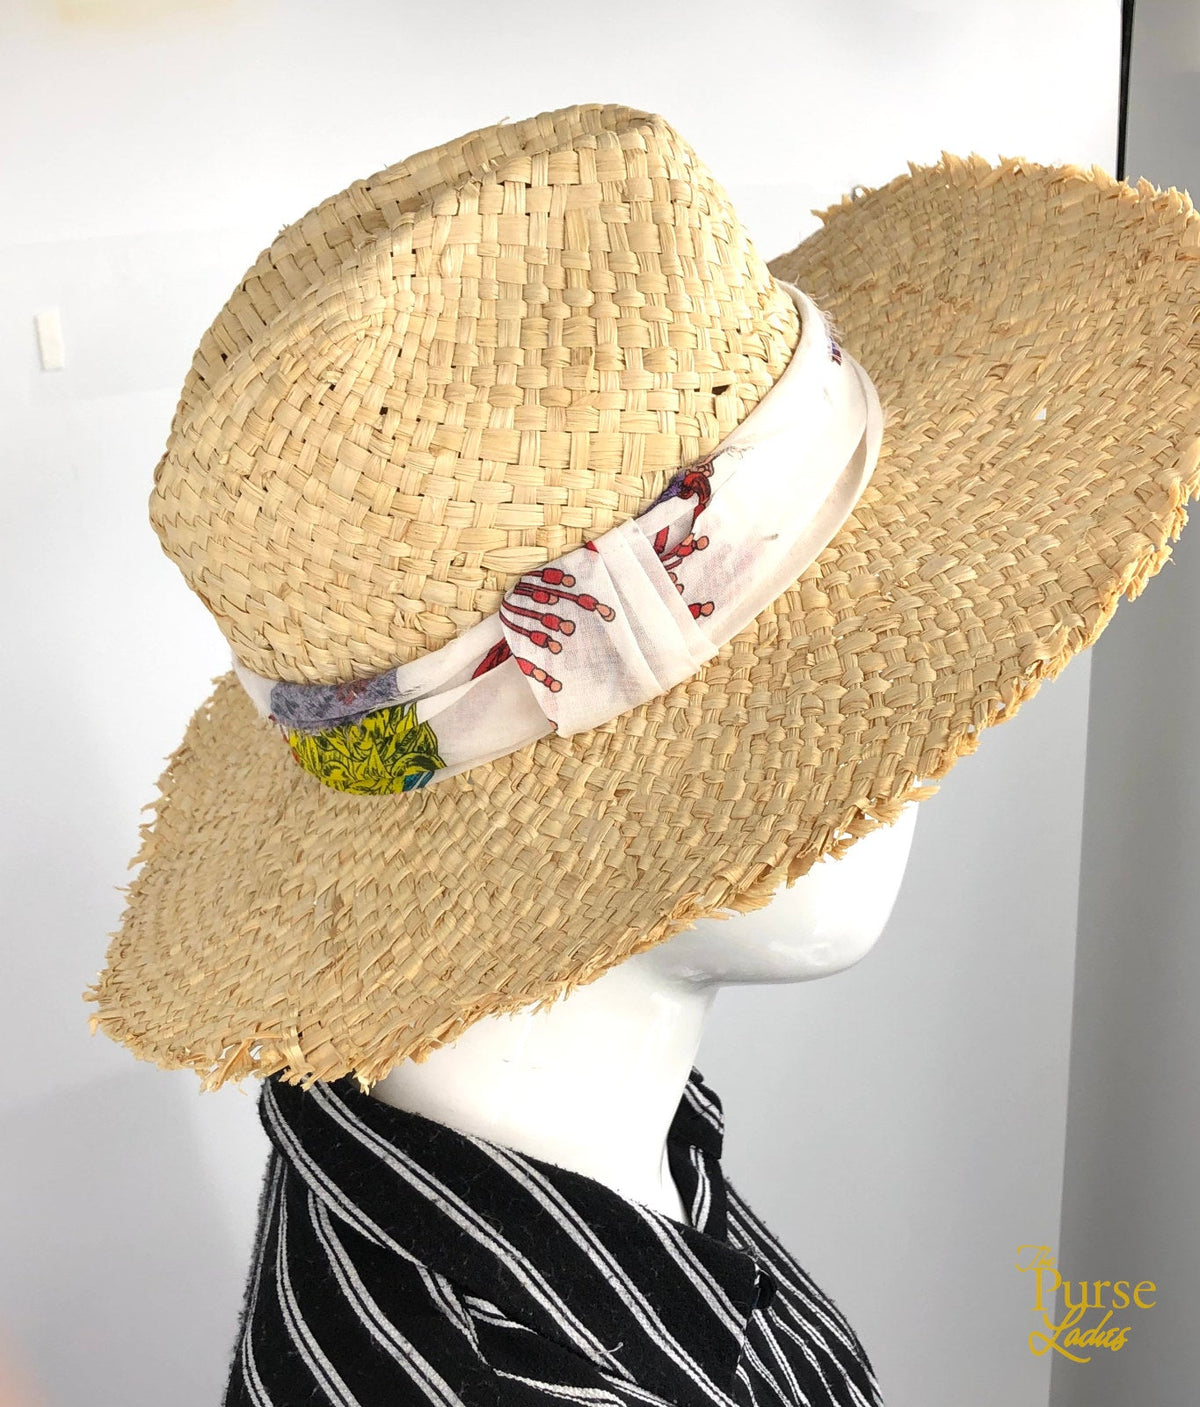 EMILLIO PUCCI Beige Straw Hat w/ Floral Print Band/Scarf